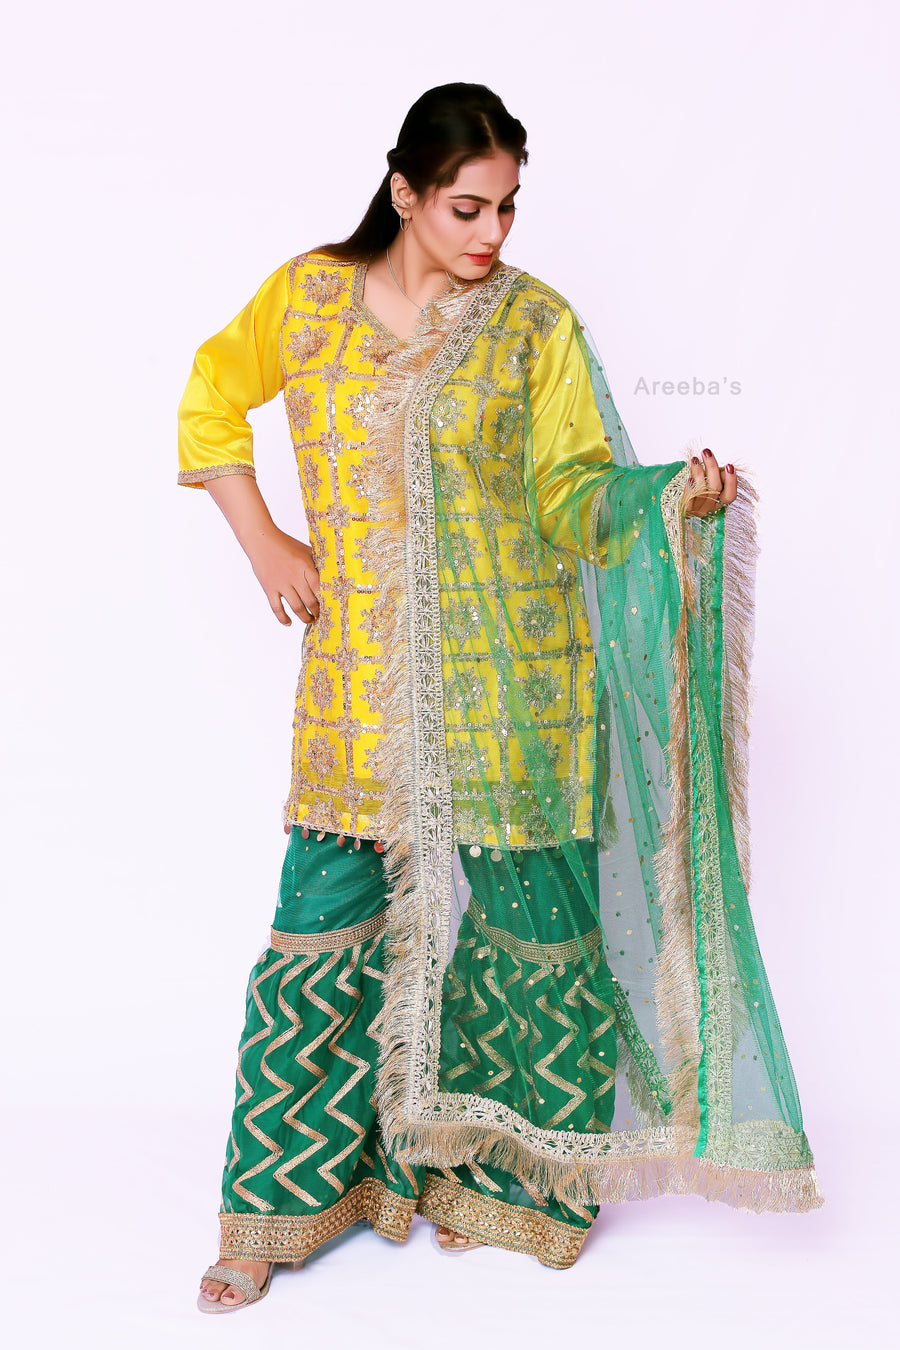 Mehndi gharaa suit- Areeba's Couture